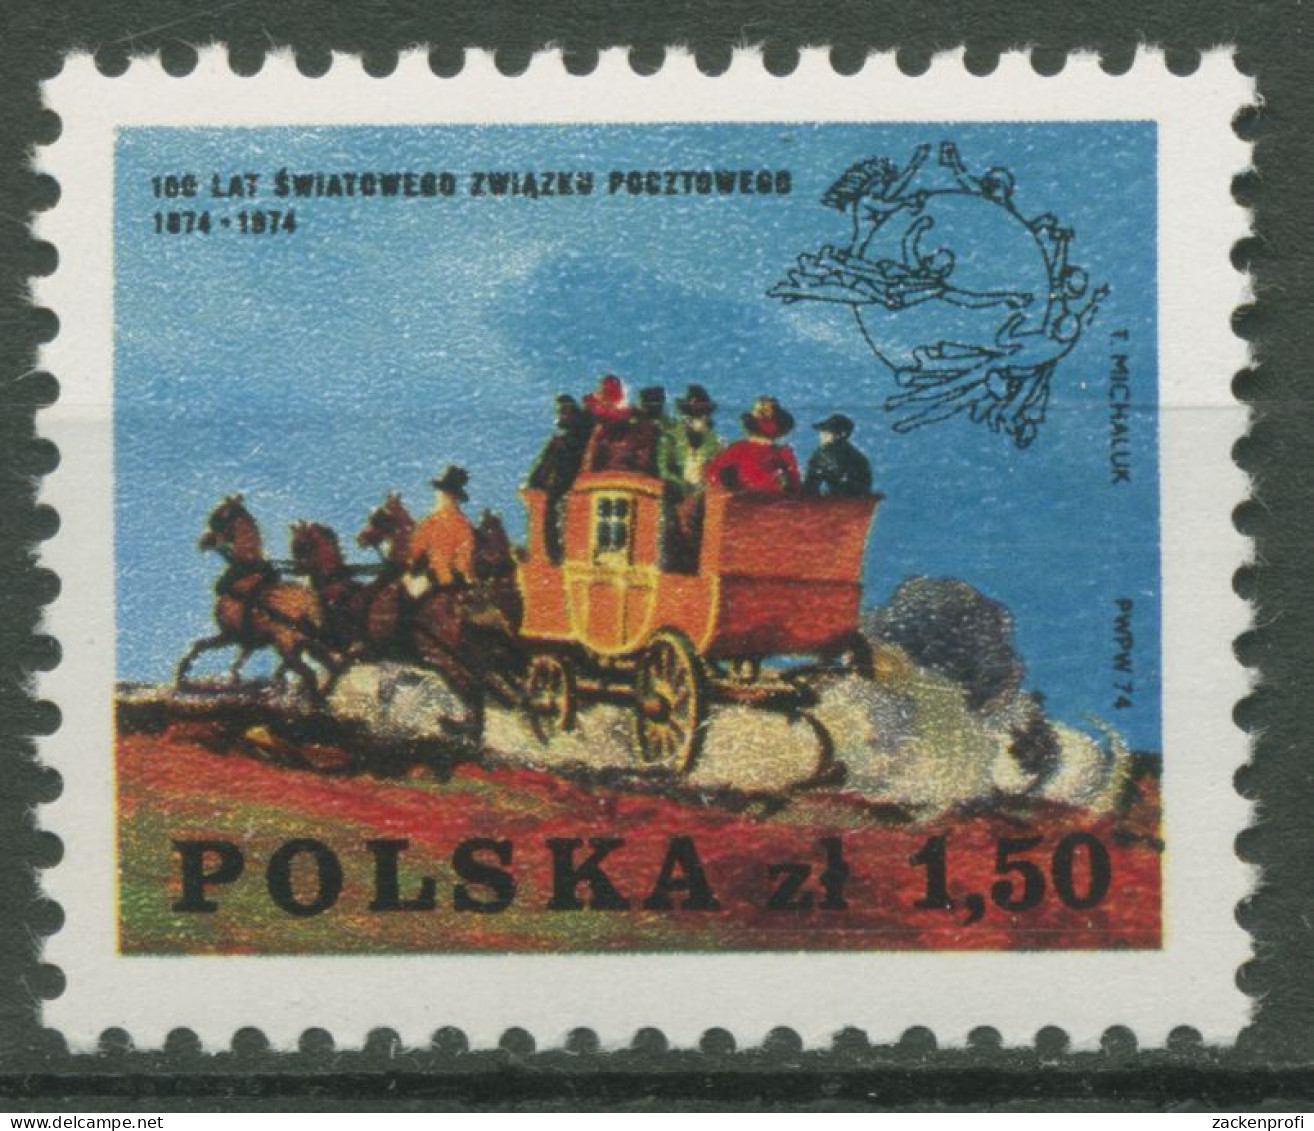 Polen 1974 Weltpostverein UPU Postkutsche 2308 Postfrisch - Ongebruikt